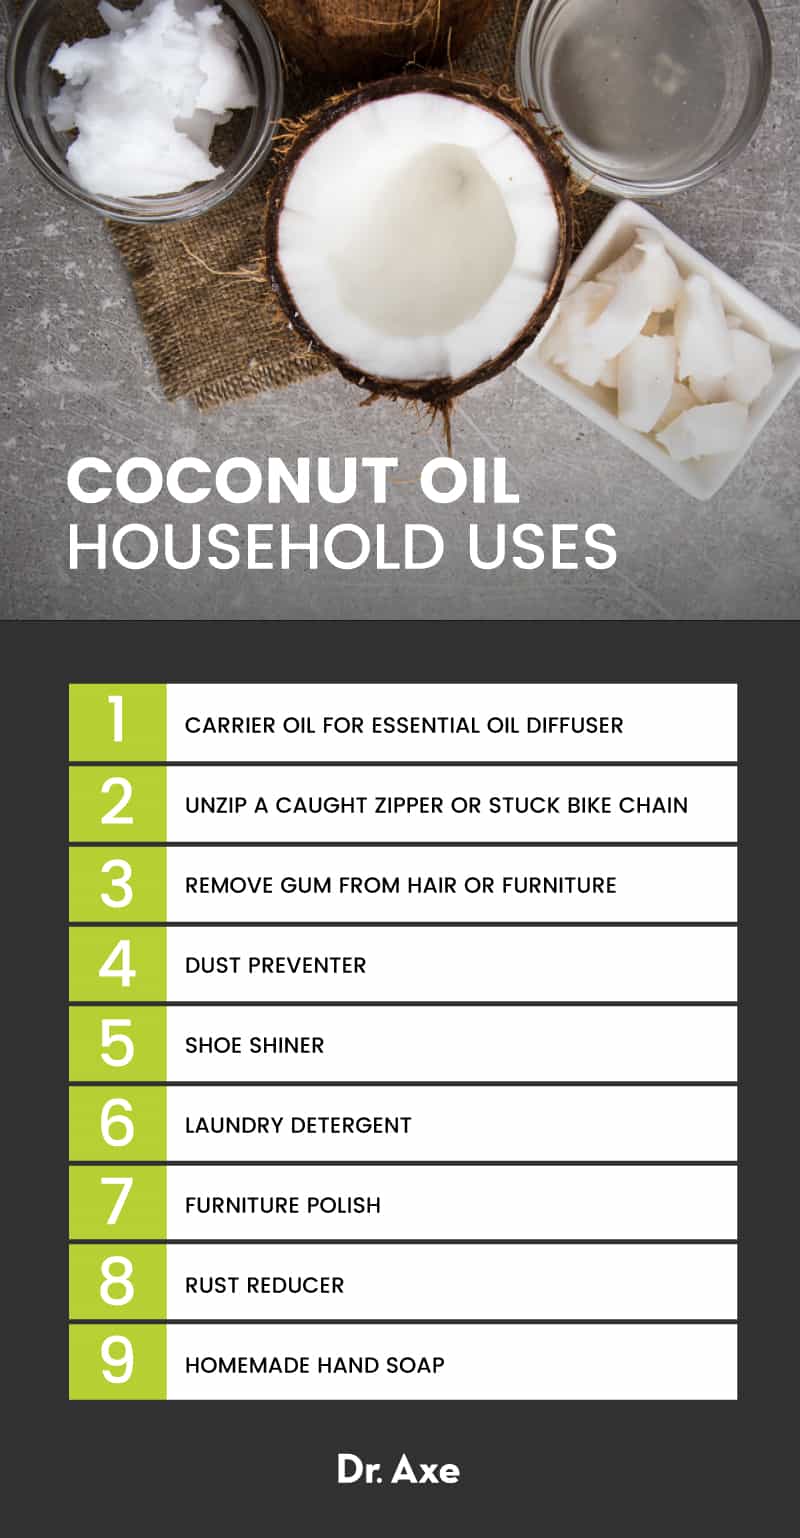 Coconut oil uses for household